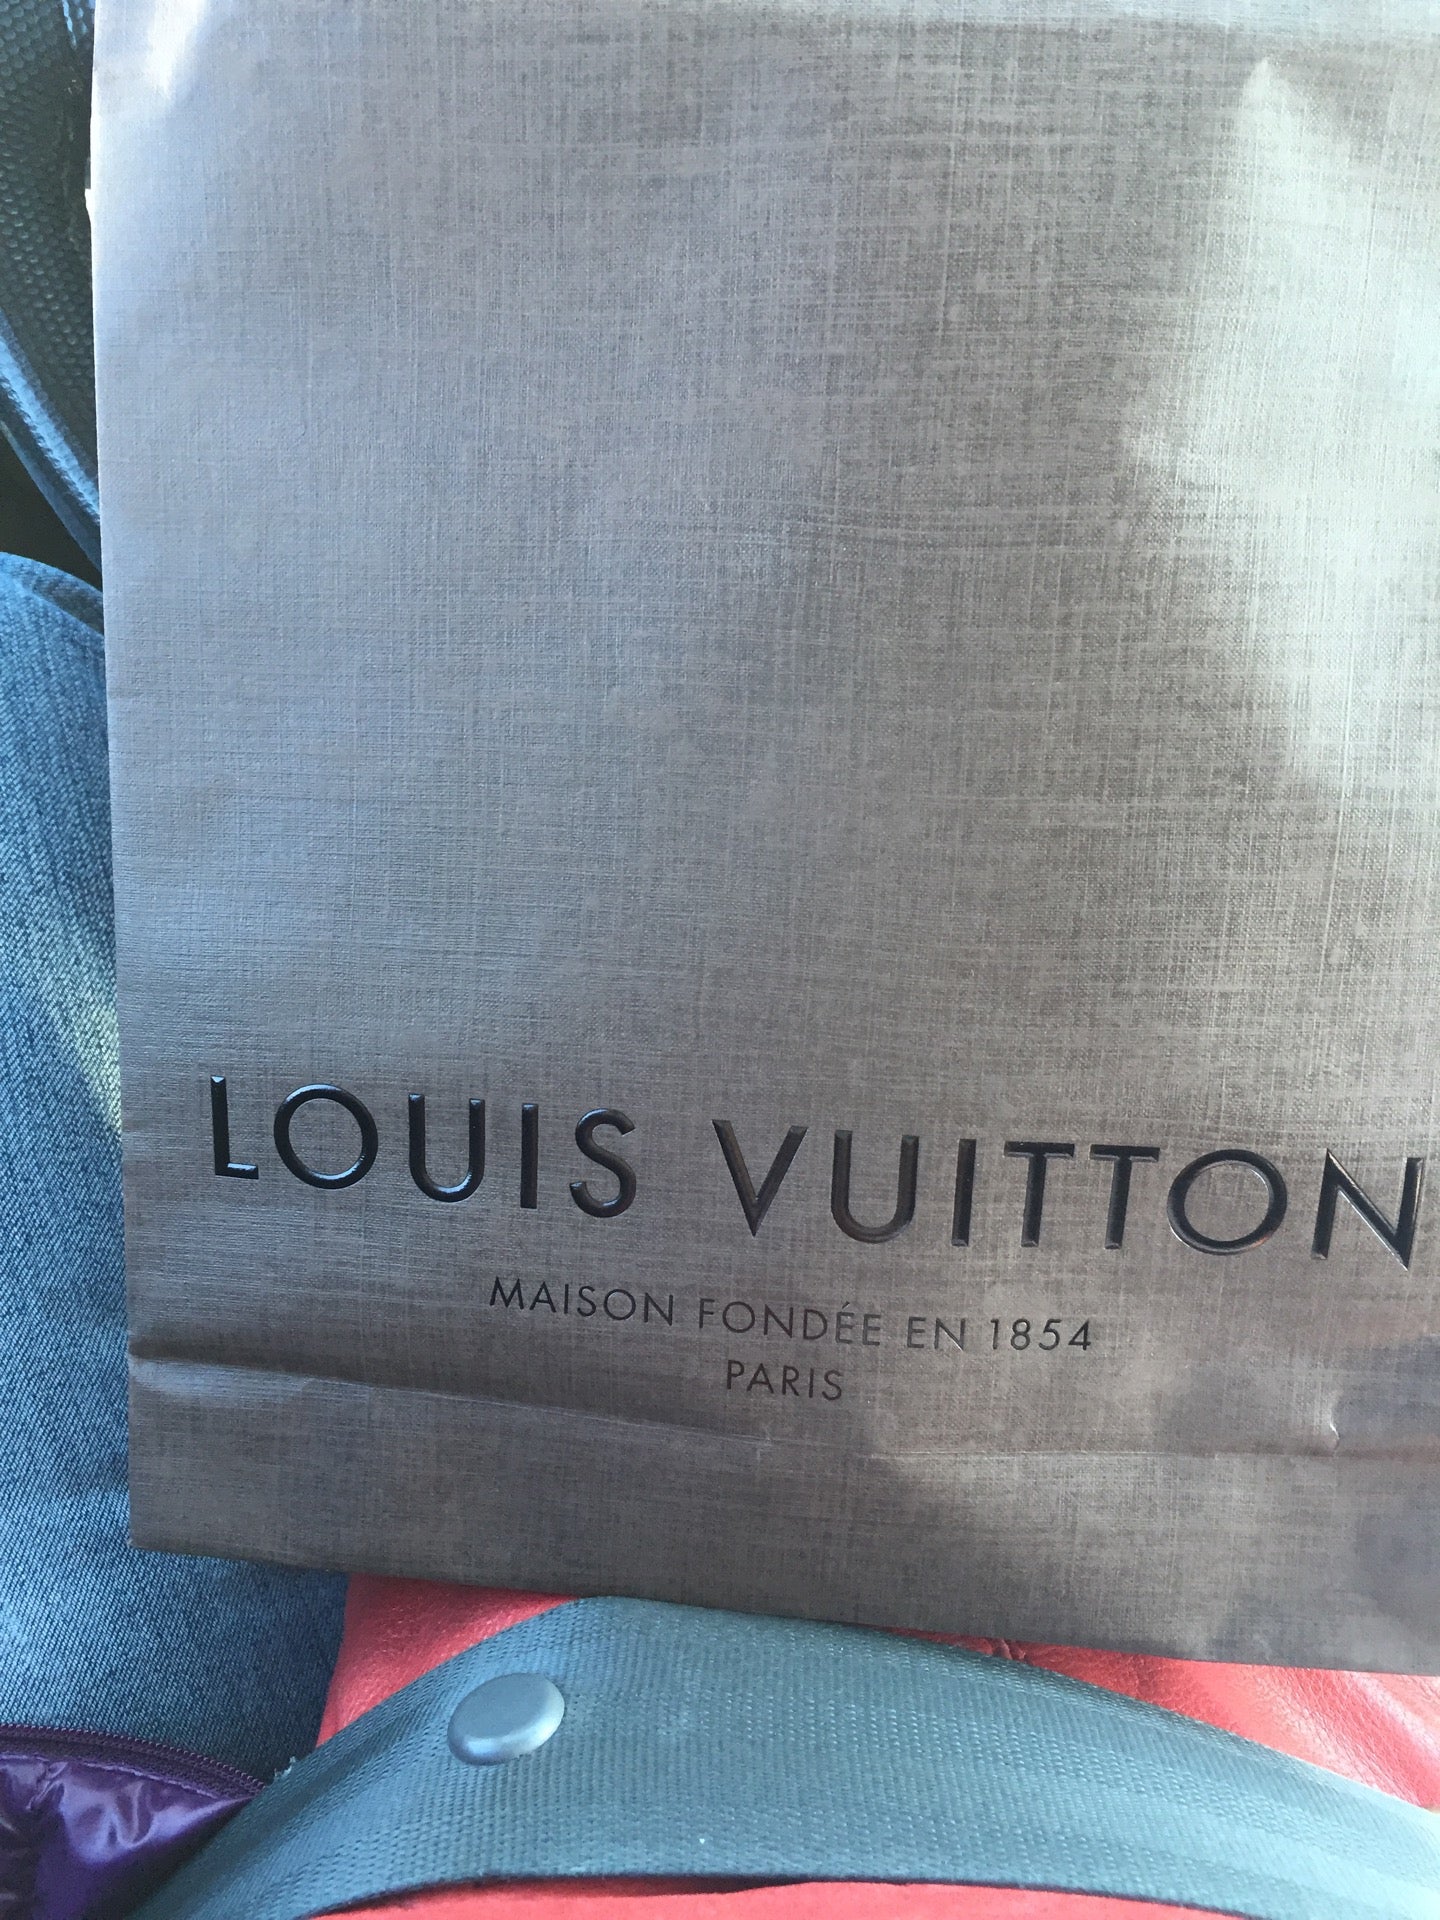 Louis Vuitton Saks Fifth Avenue Birmingham Al